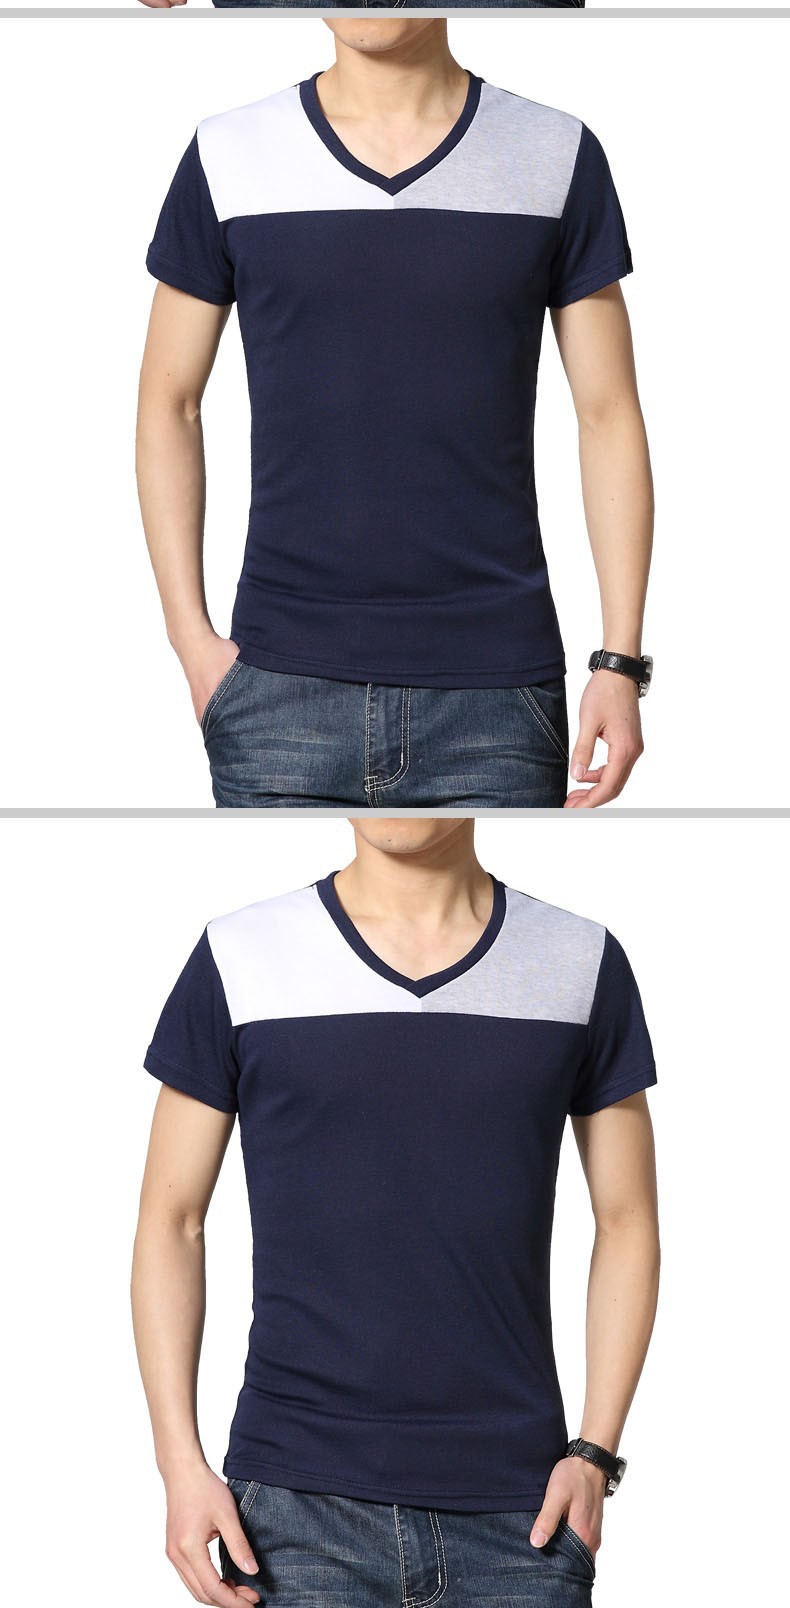 2017-summer-style-T-shirt-men-casual-print-short-sleeve-cotton-t-shirt-slim--patchwork-Tee-shirt-Top-32342180584